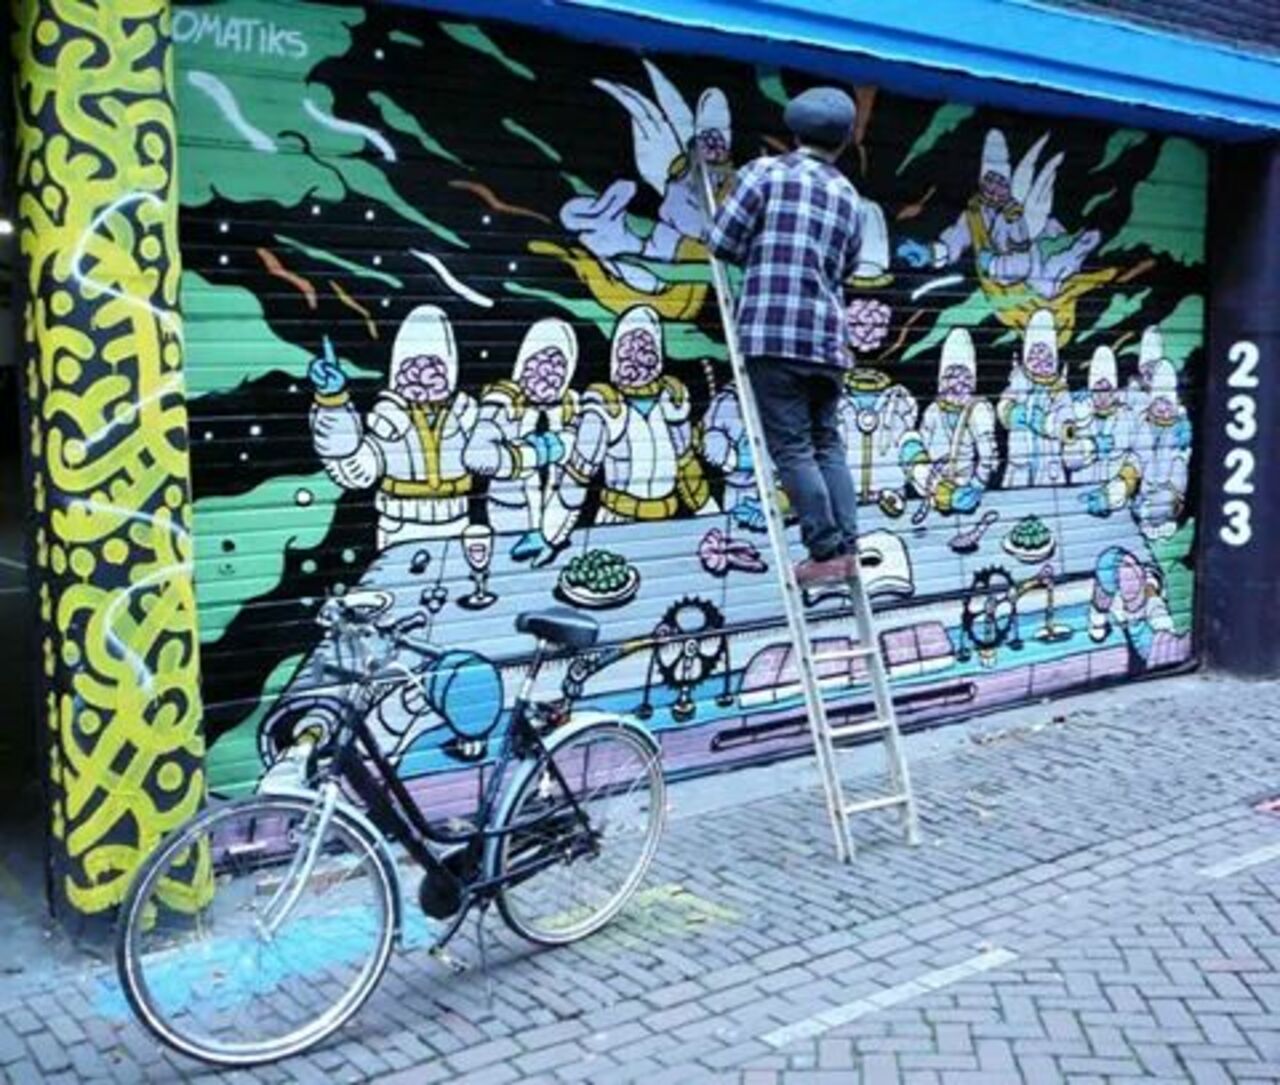 mrbrain's #artwork near Amsterdam
#art #streetart #graffiti http://t.co/Pc2RpnG7aZ